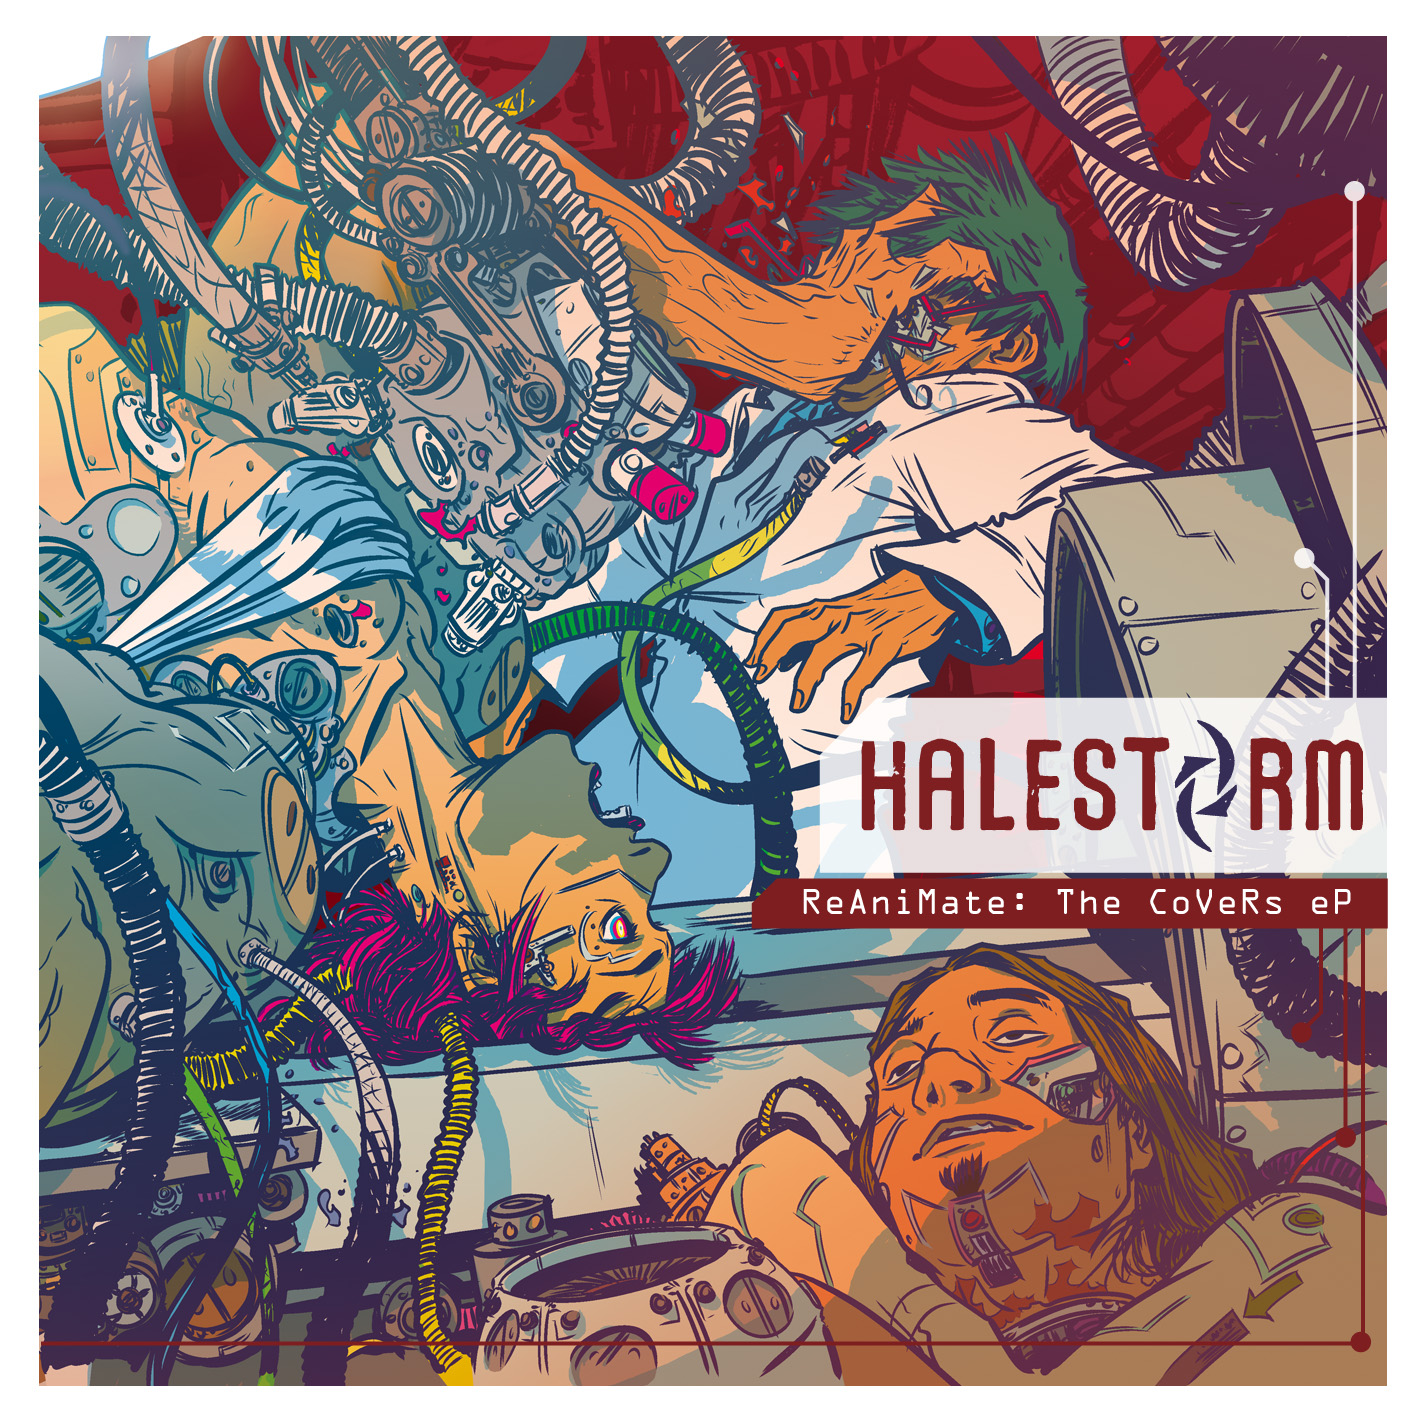 Halestorm+reanimate+the+covers+ep+blogspot